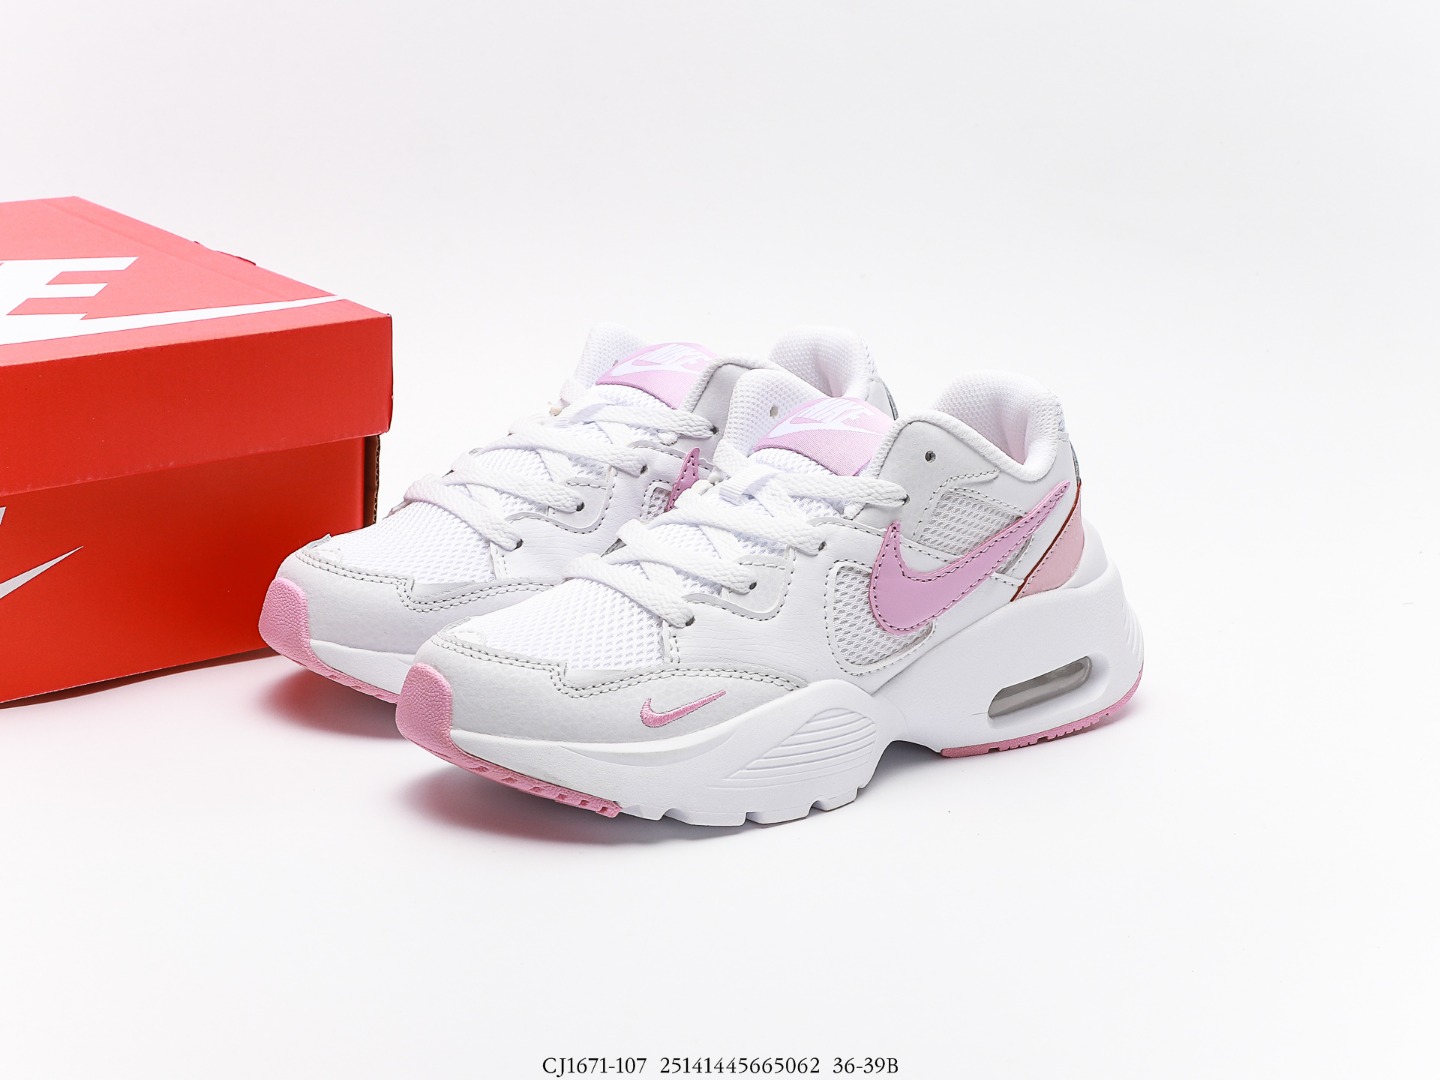 Nike Air Max fusione bianco rosa Glaze_CJ1671-107